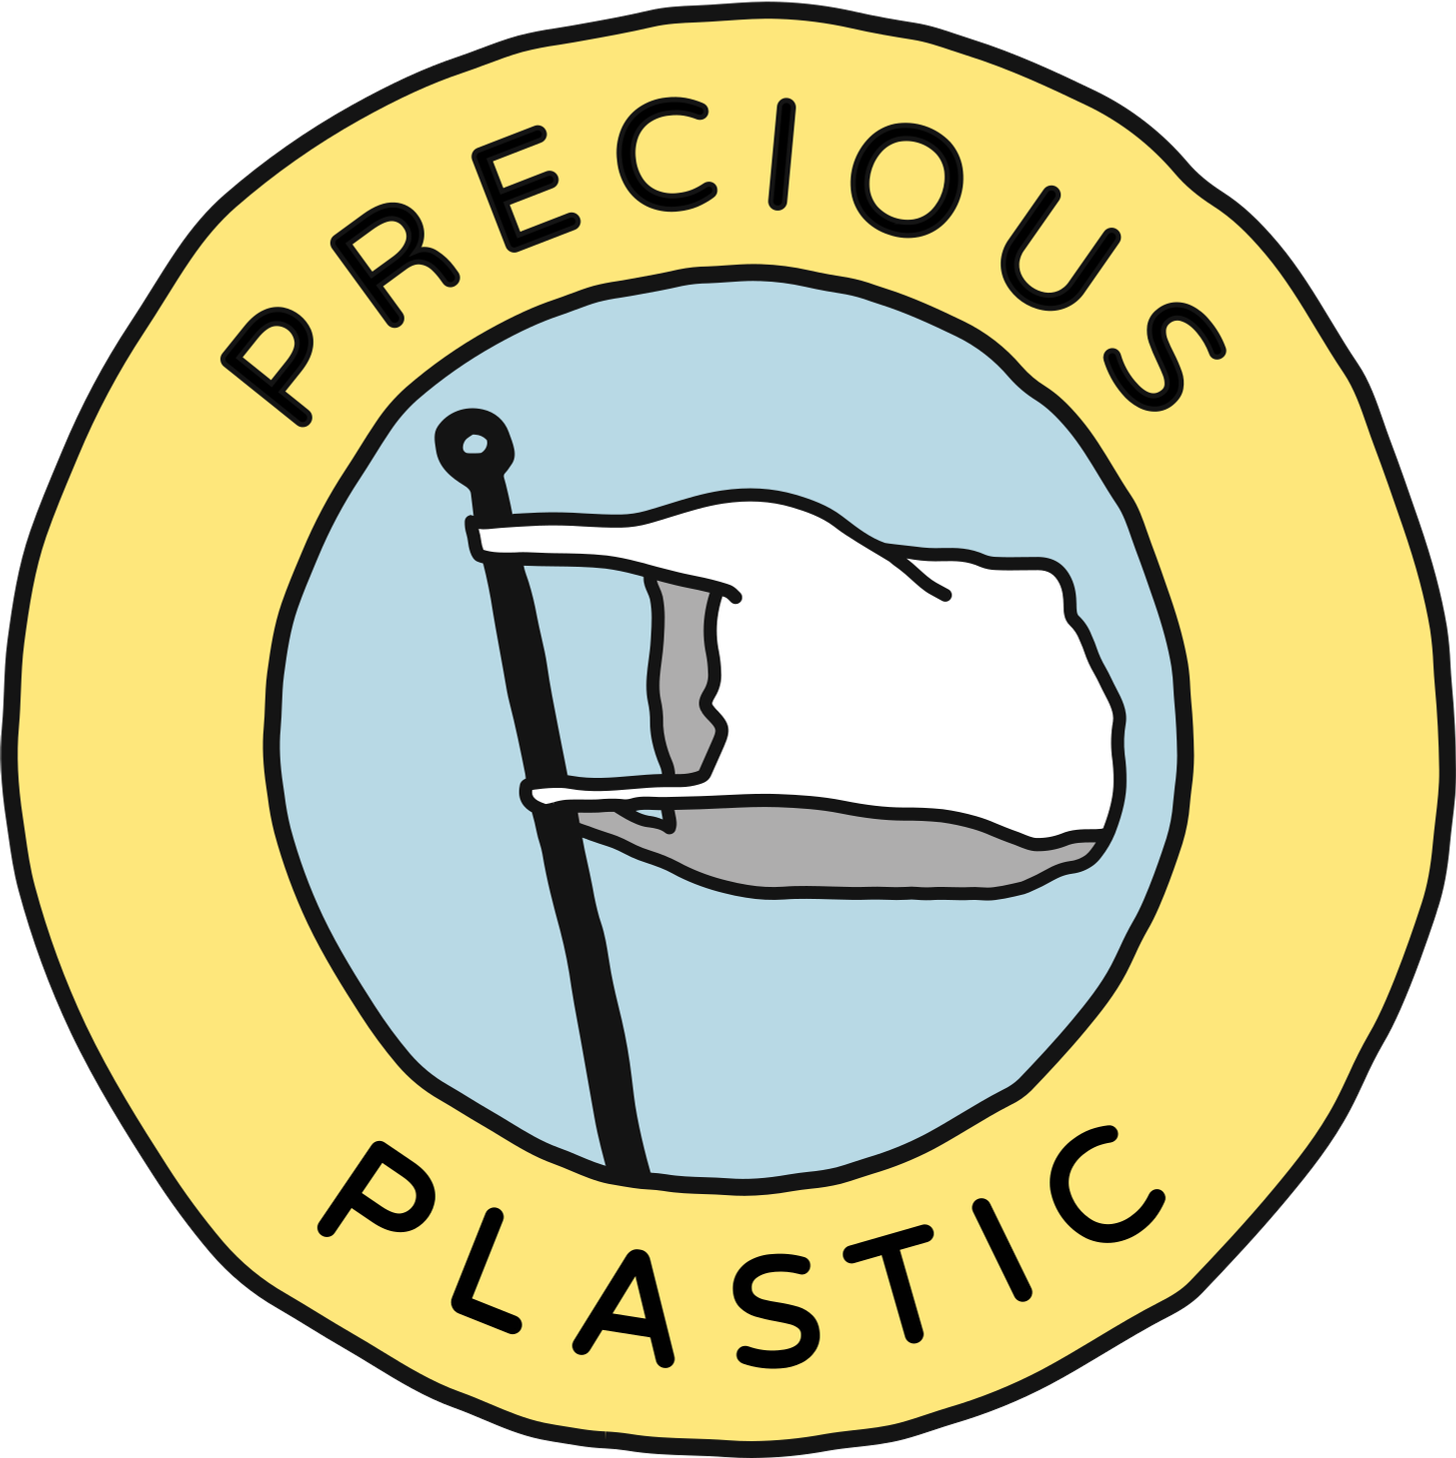 Precious Plastic logo 481b1017f82680383443bc1cda3d487e0f8e9d33